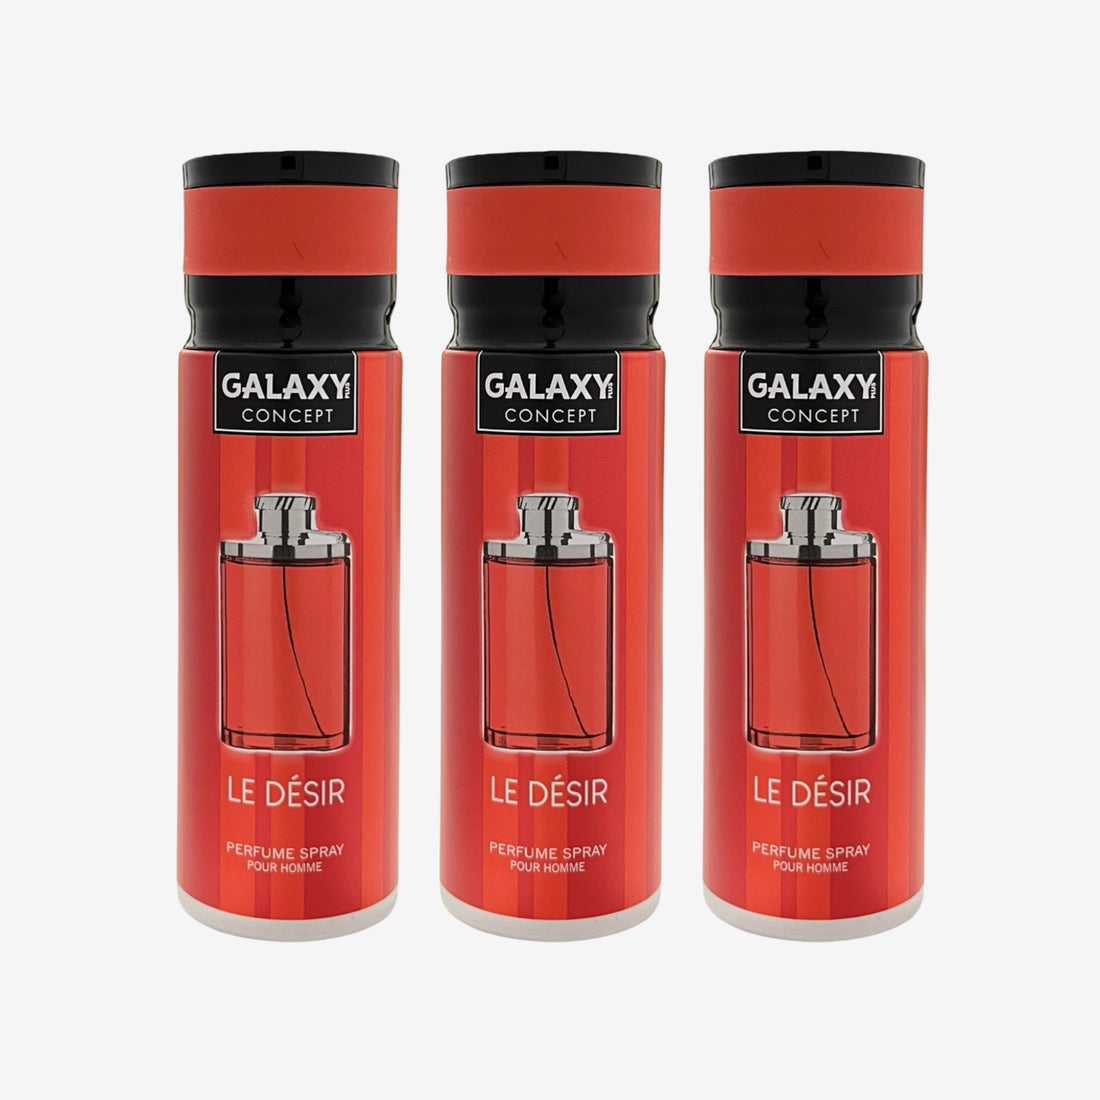 Galaxy Plus Concept LE DESIR Perfume Body Spray - Inspired By Desire for a Man